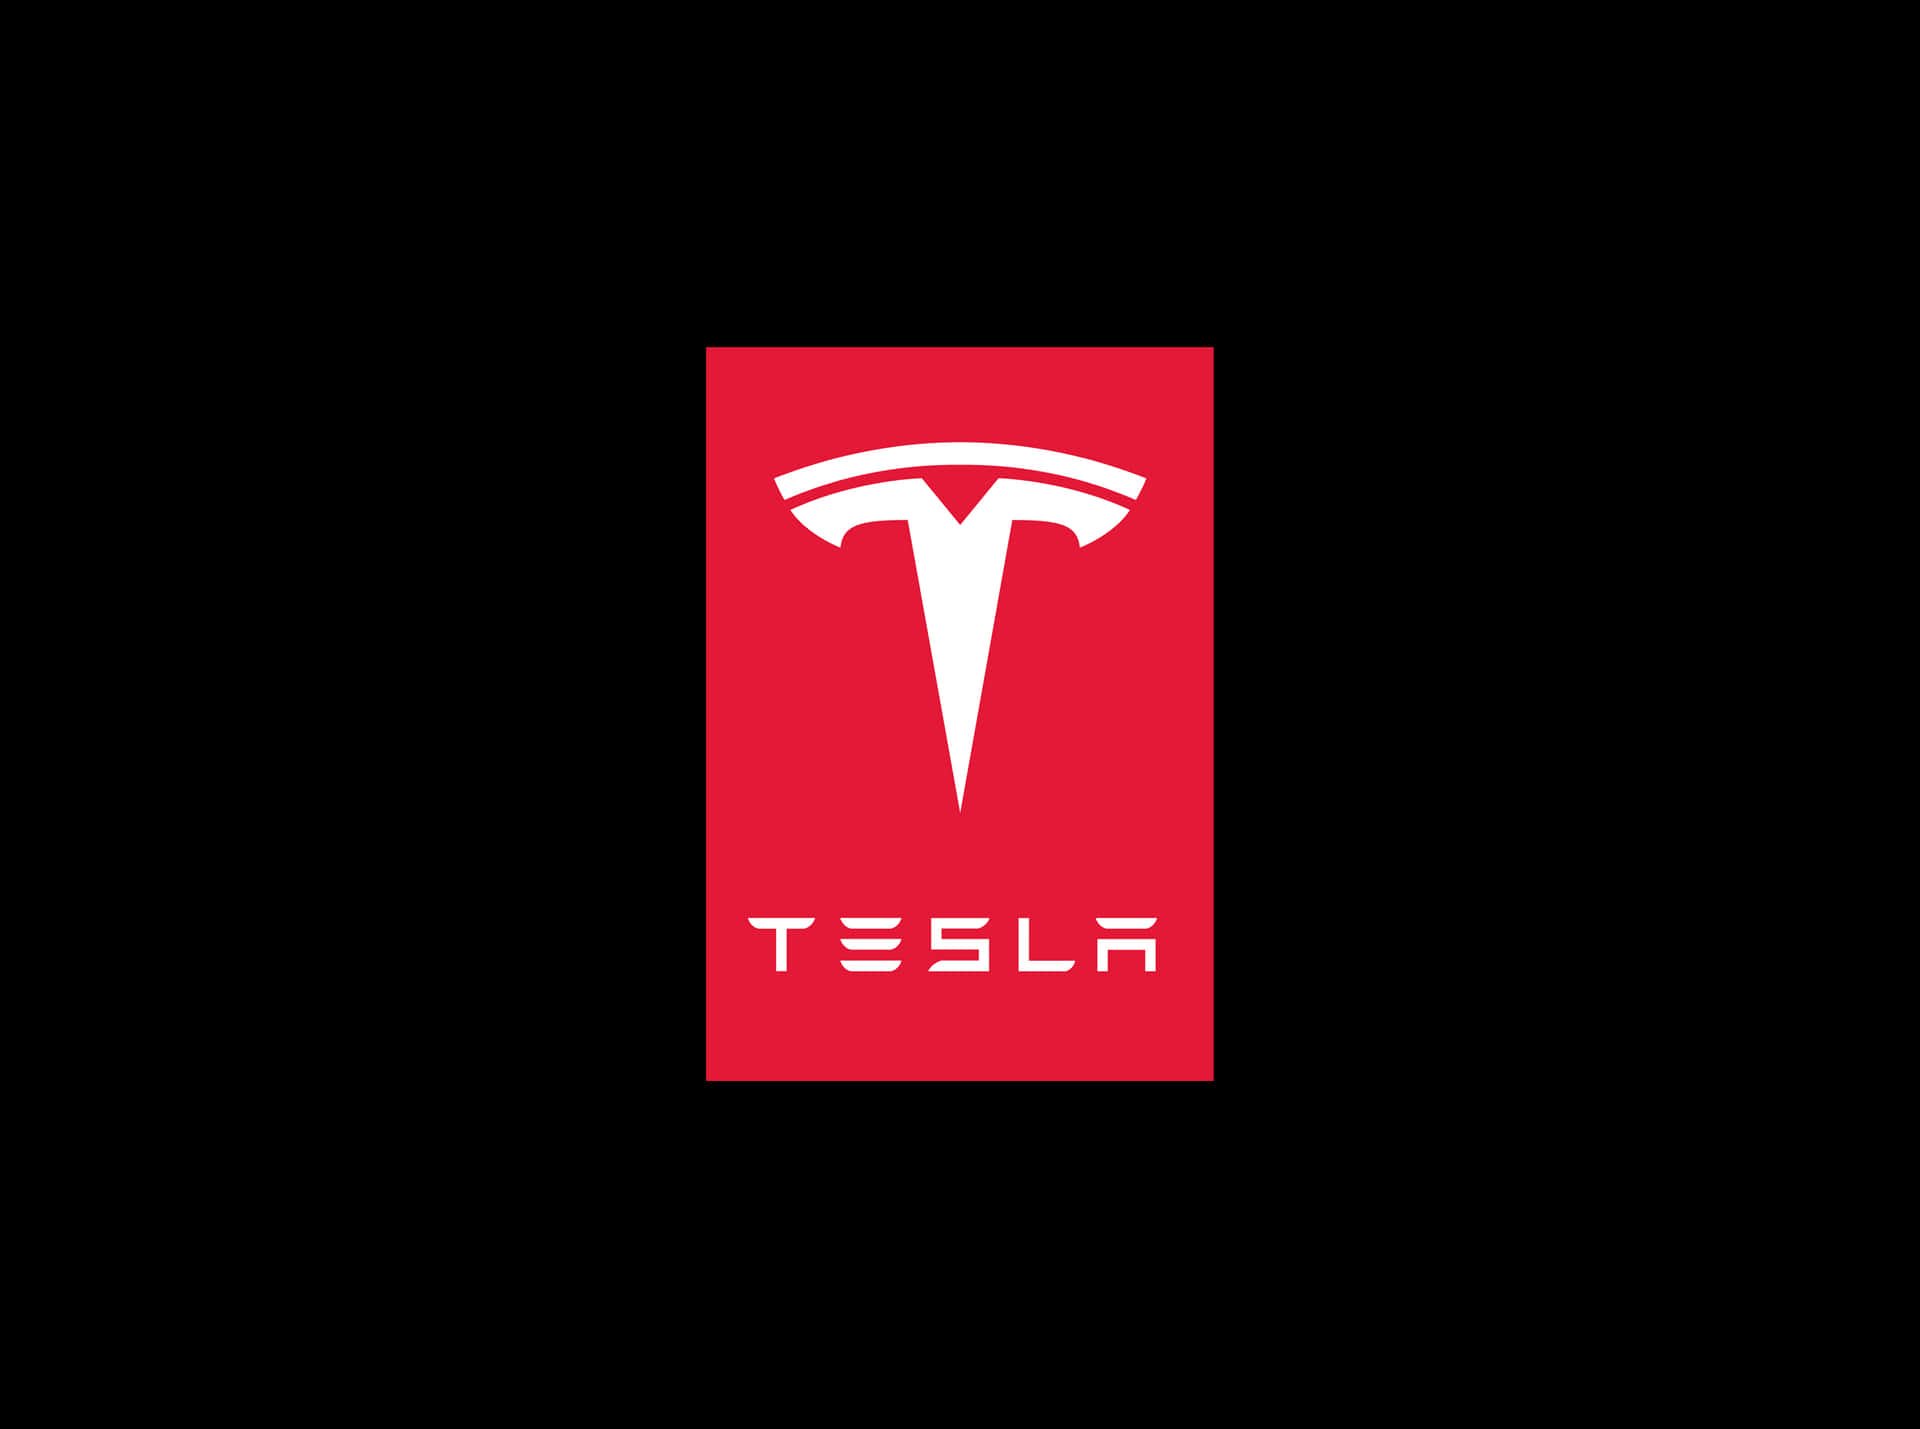 The iconic Tesla logo in 4K resolution. Wallpaper